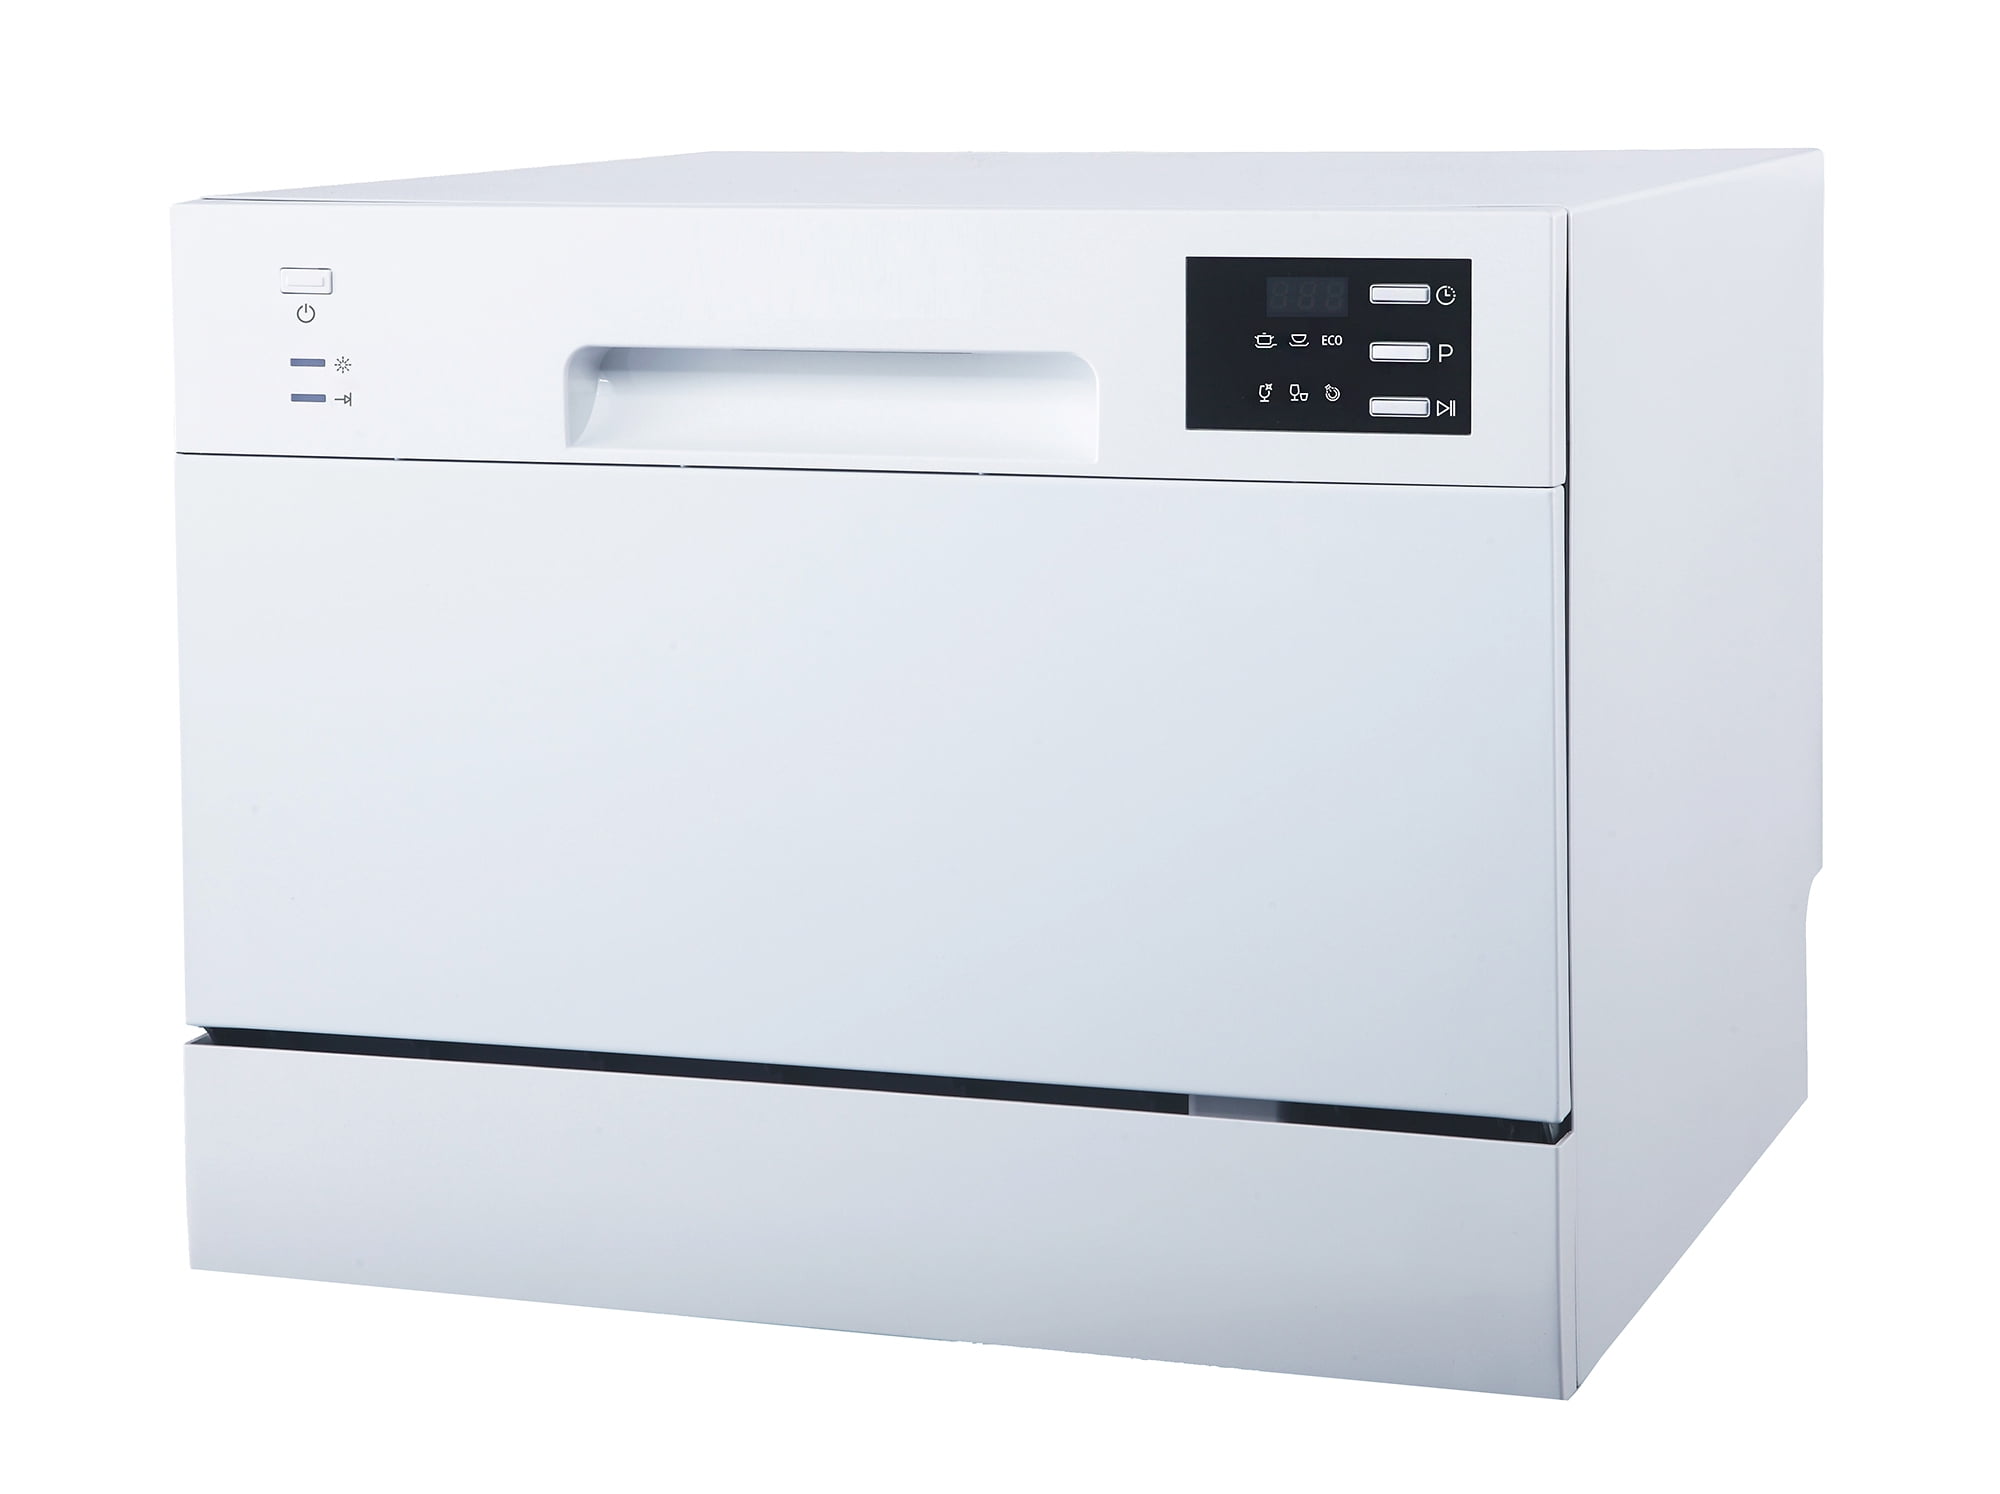 Sunpentown Delay Start & LED DIsplay Countertop Dishwasher, 2220 Series, White - 3